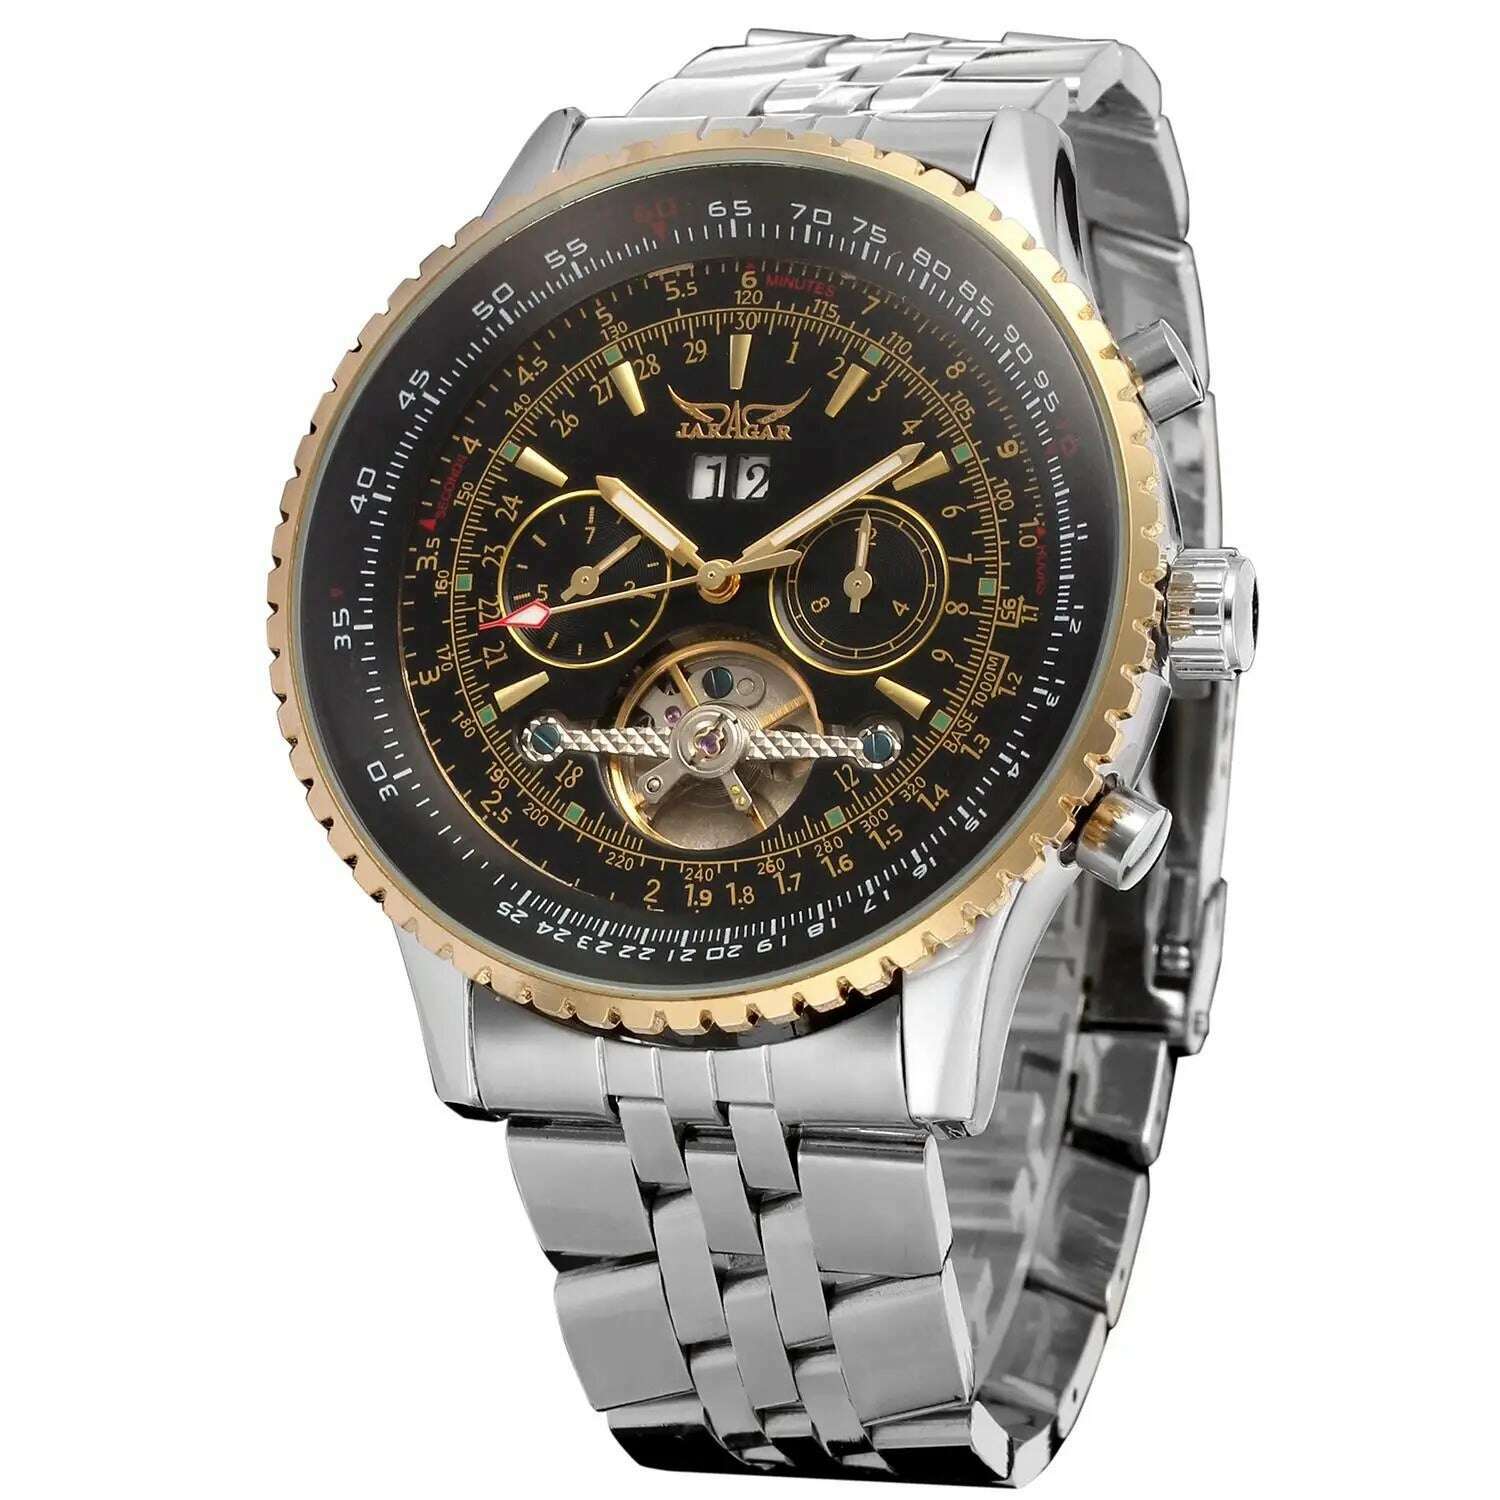 KIMLUD, 2019 Jaragar Top Brand Mens Watches Luxury Men Military Sport Wristwatch Automatic Mechanical Tourbillon Clock Relogio Masculino, Gold Black, KIMLUD Women's Clothes